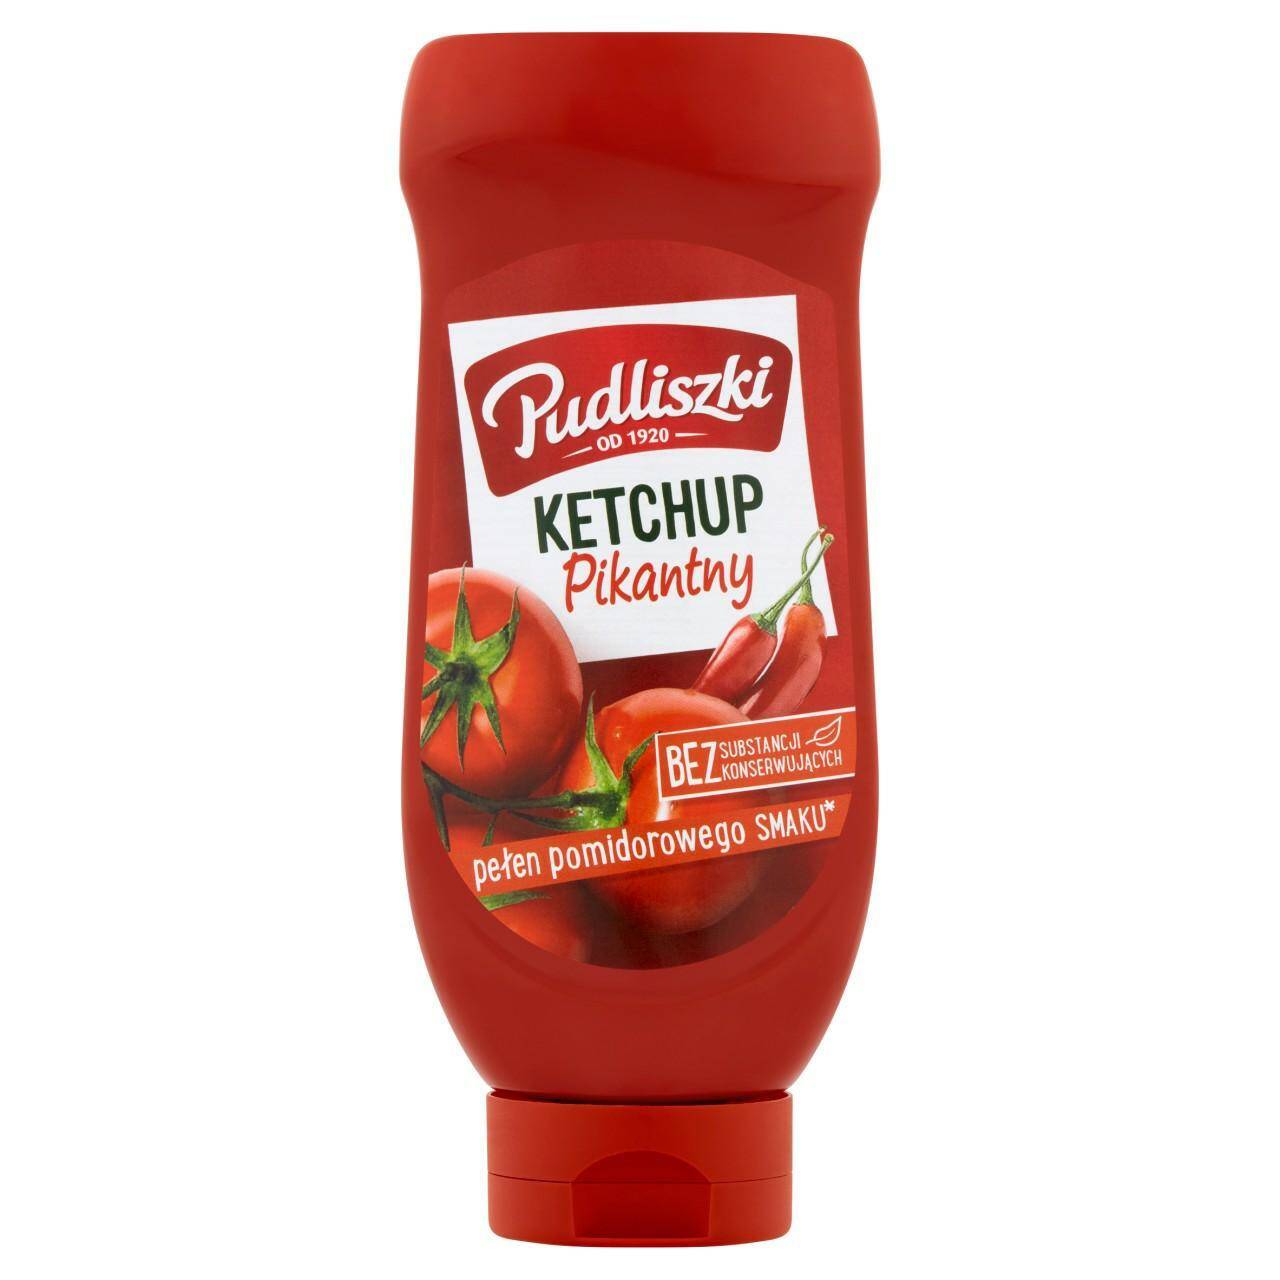 Ketchup Pudliszki pikantny 700g